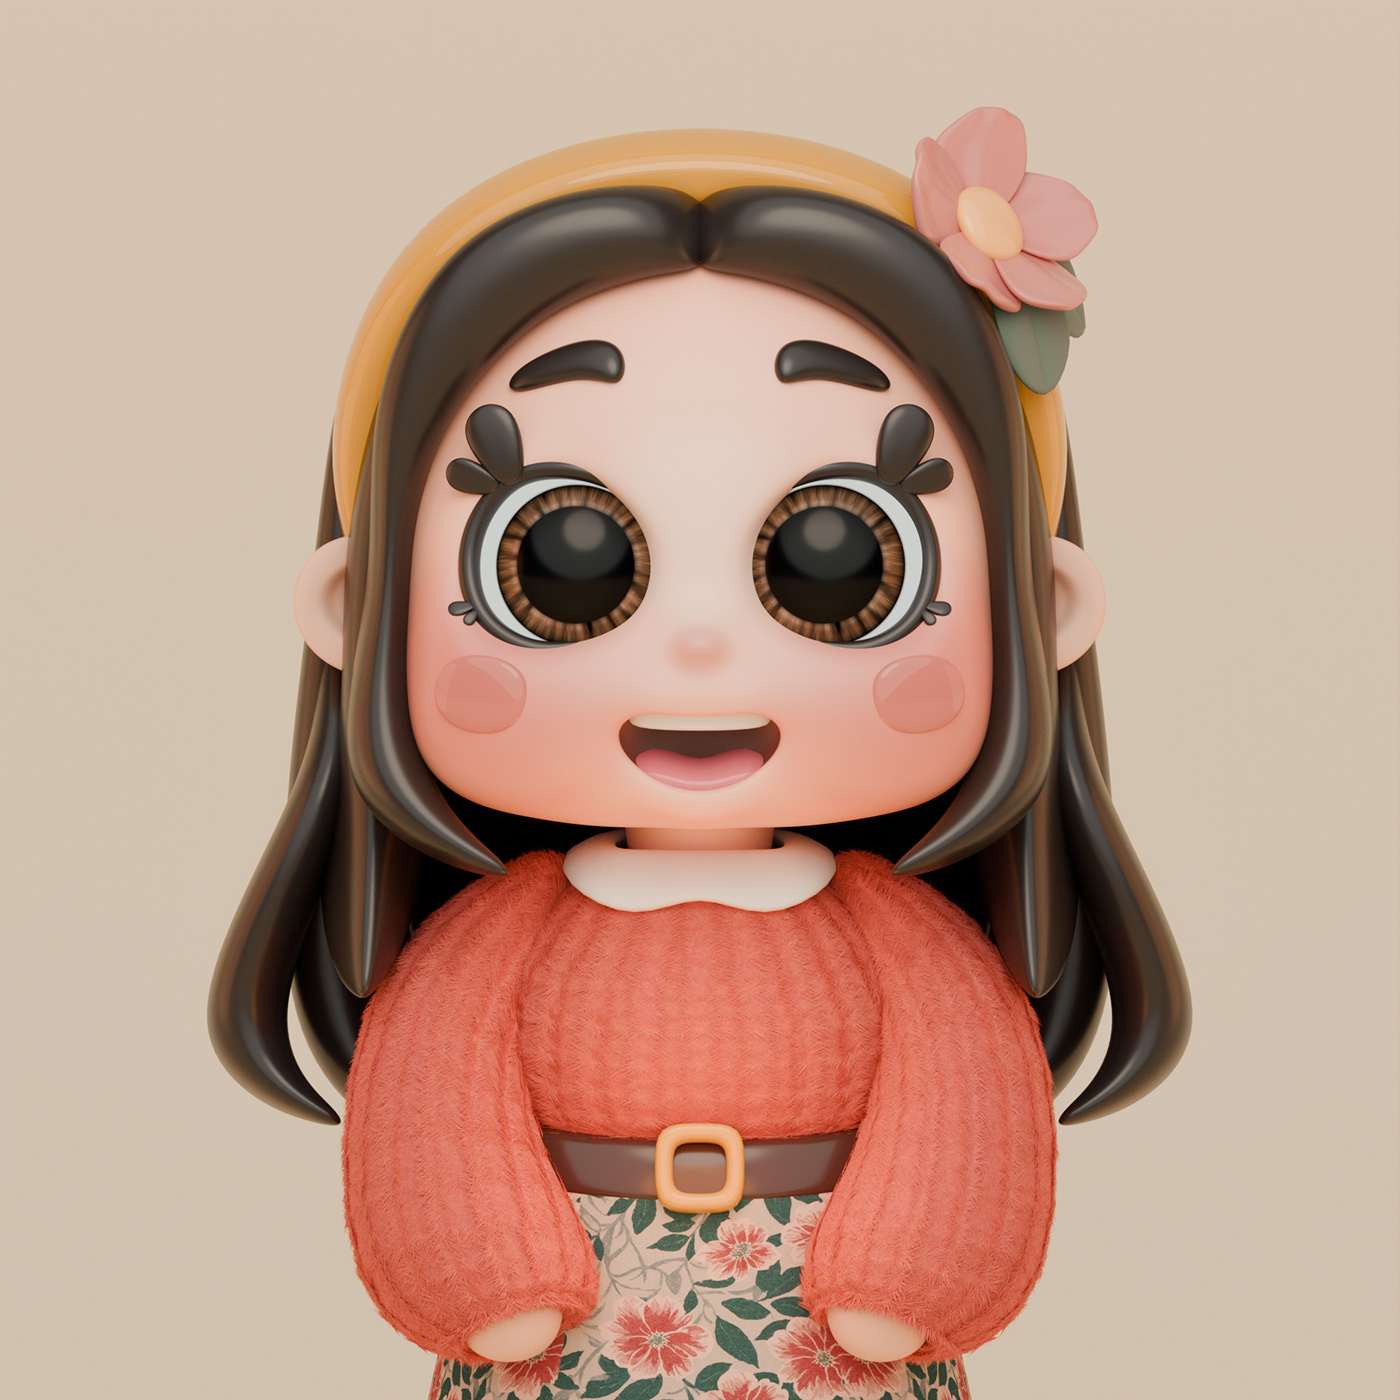 blender blender3d avatar3d 3dcharacter cycles chubby cute girl Animal Crossing